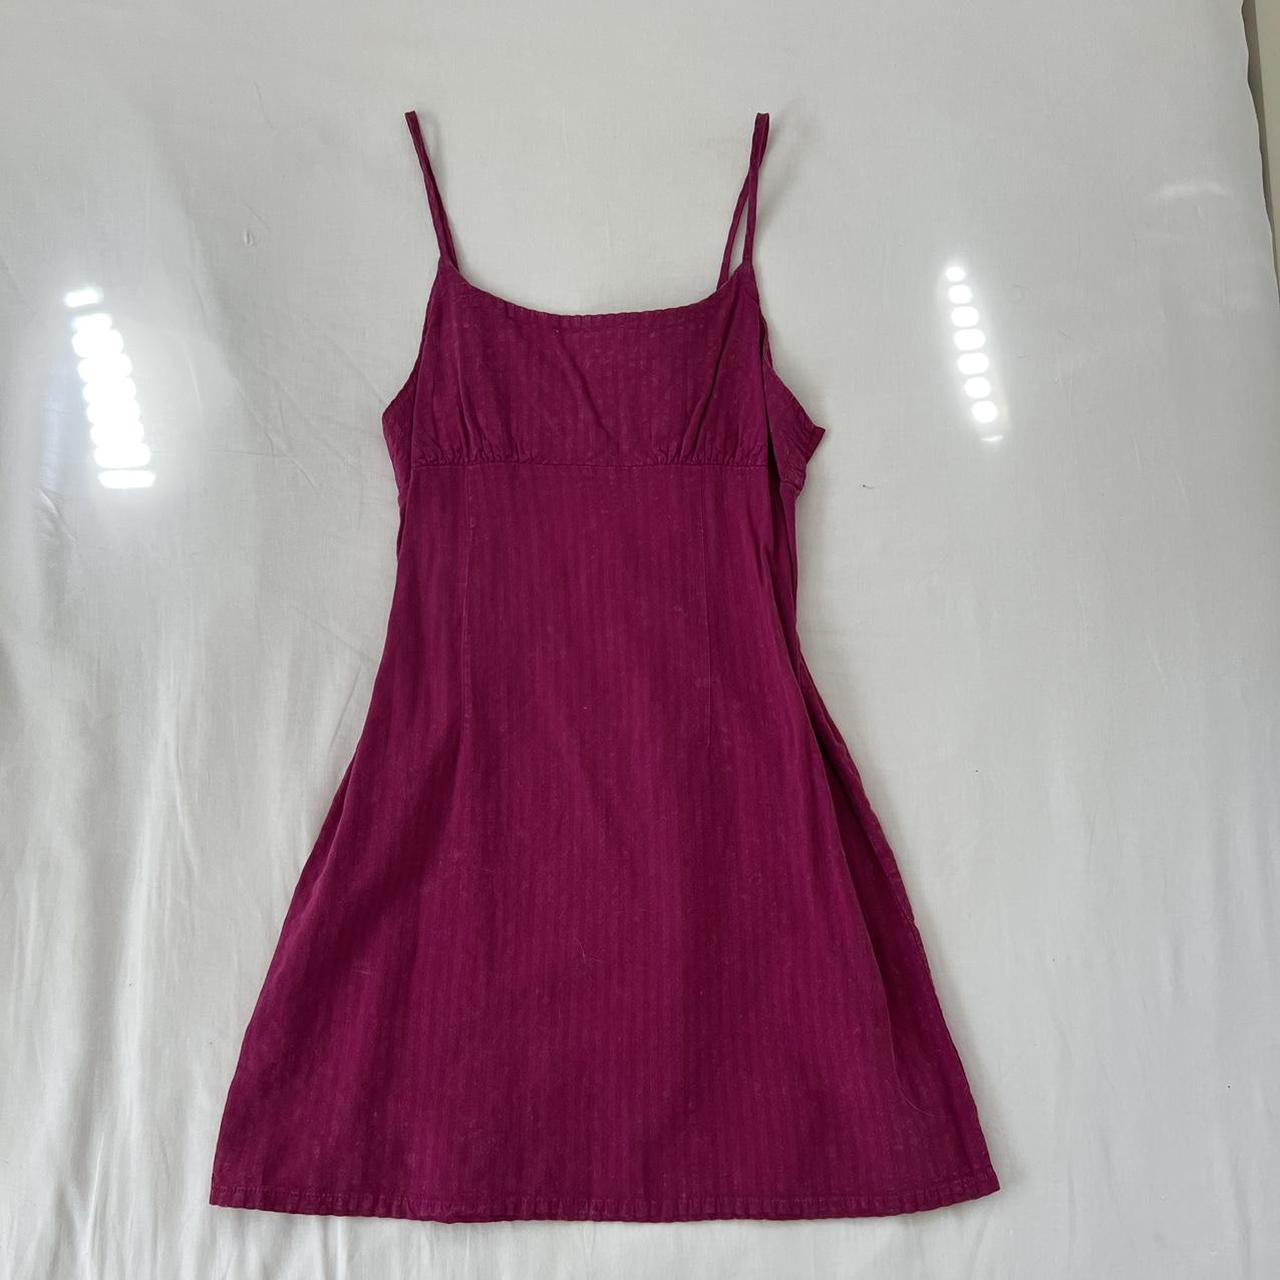 WILD FABLE PINK DRESS Size: Medium (true to size)... - Depop